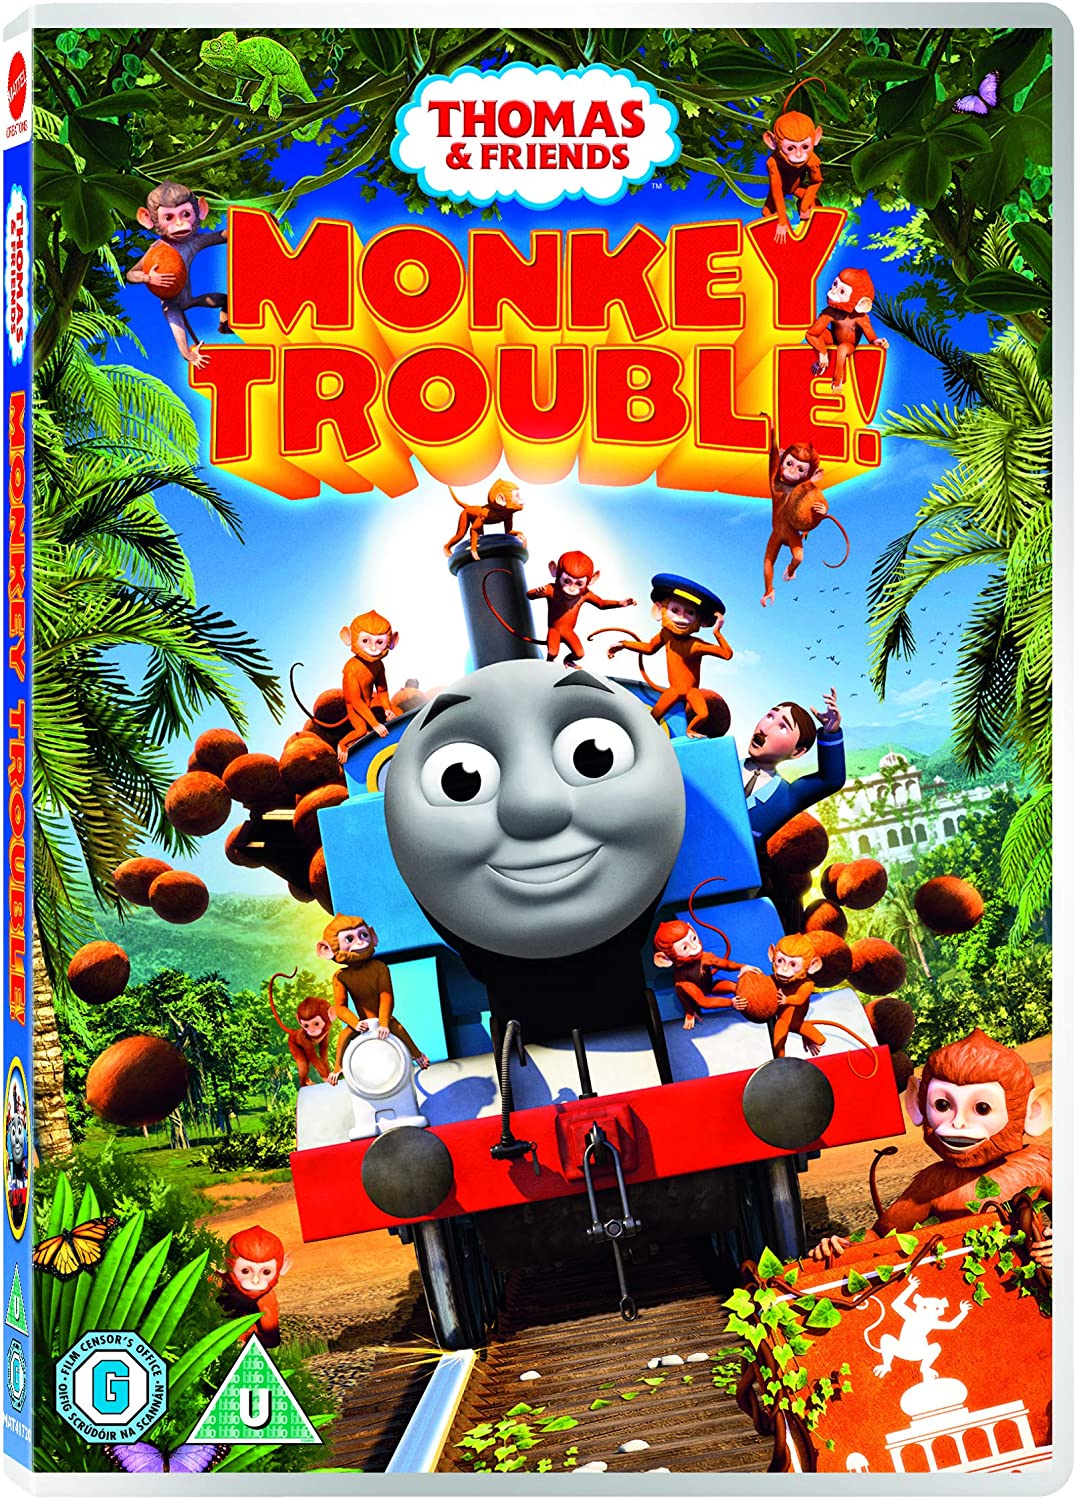 Thomas & Friends - Monkey Trouble! - Family [DVD]